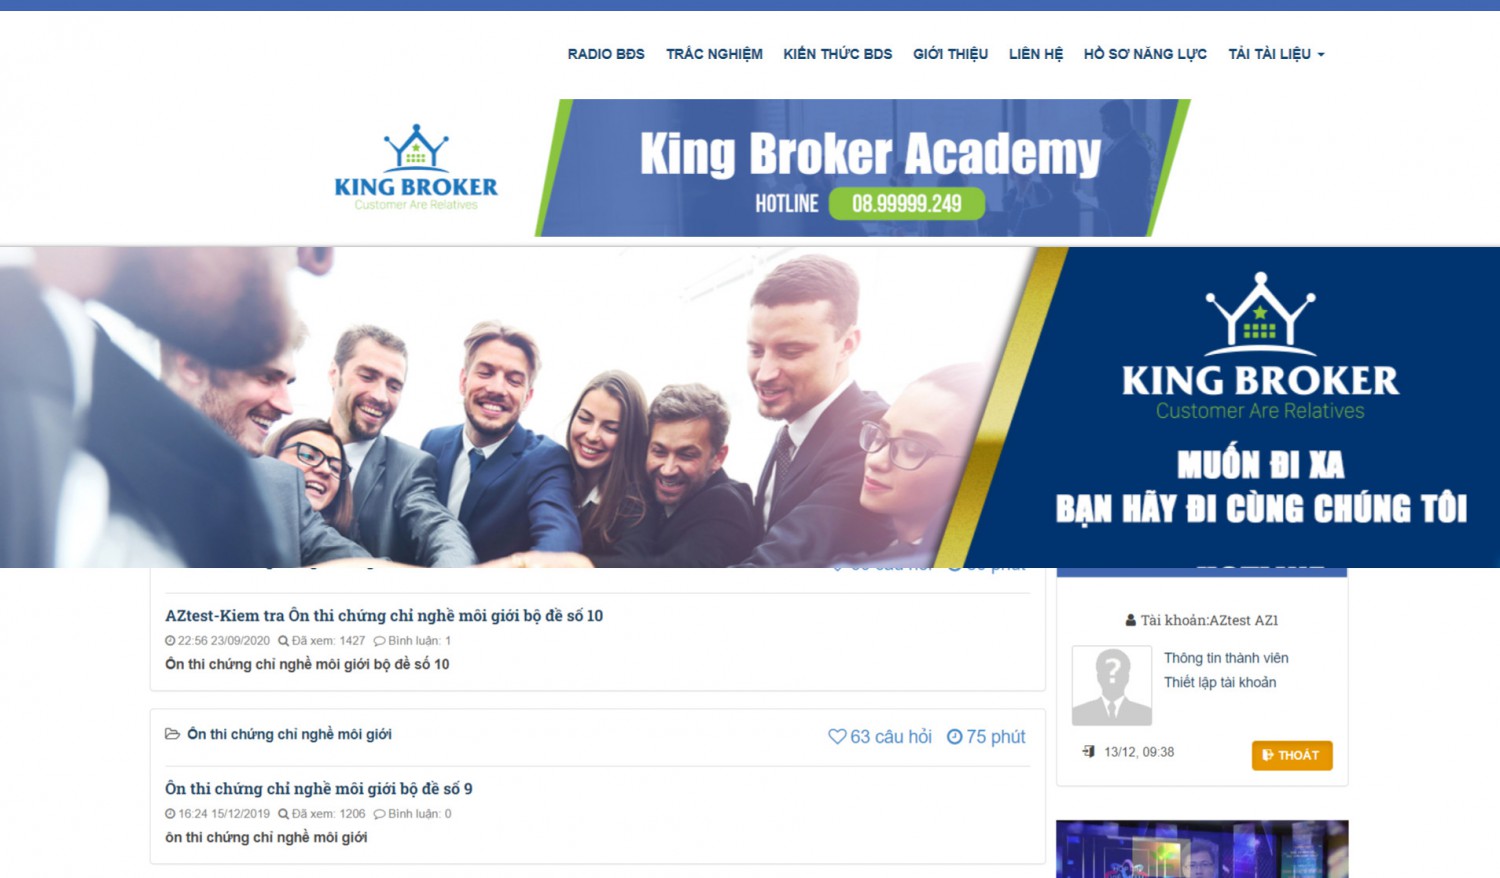 giao diện trang chủ của website king broker acamedy